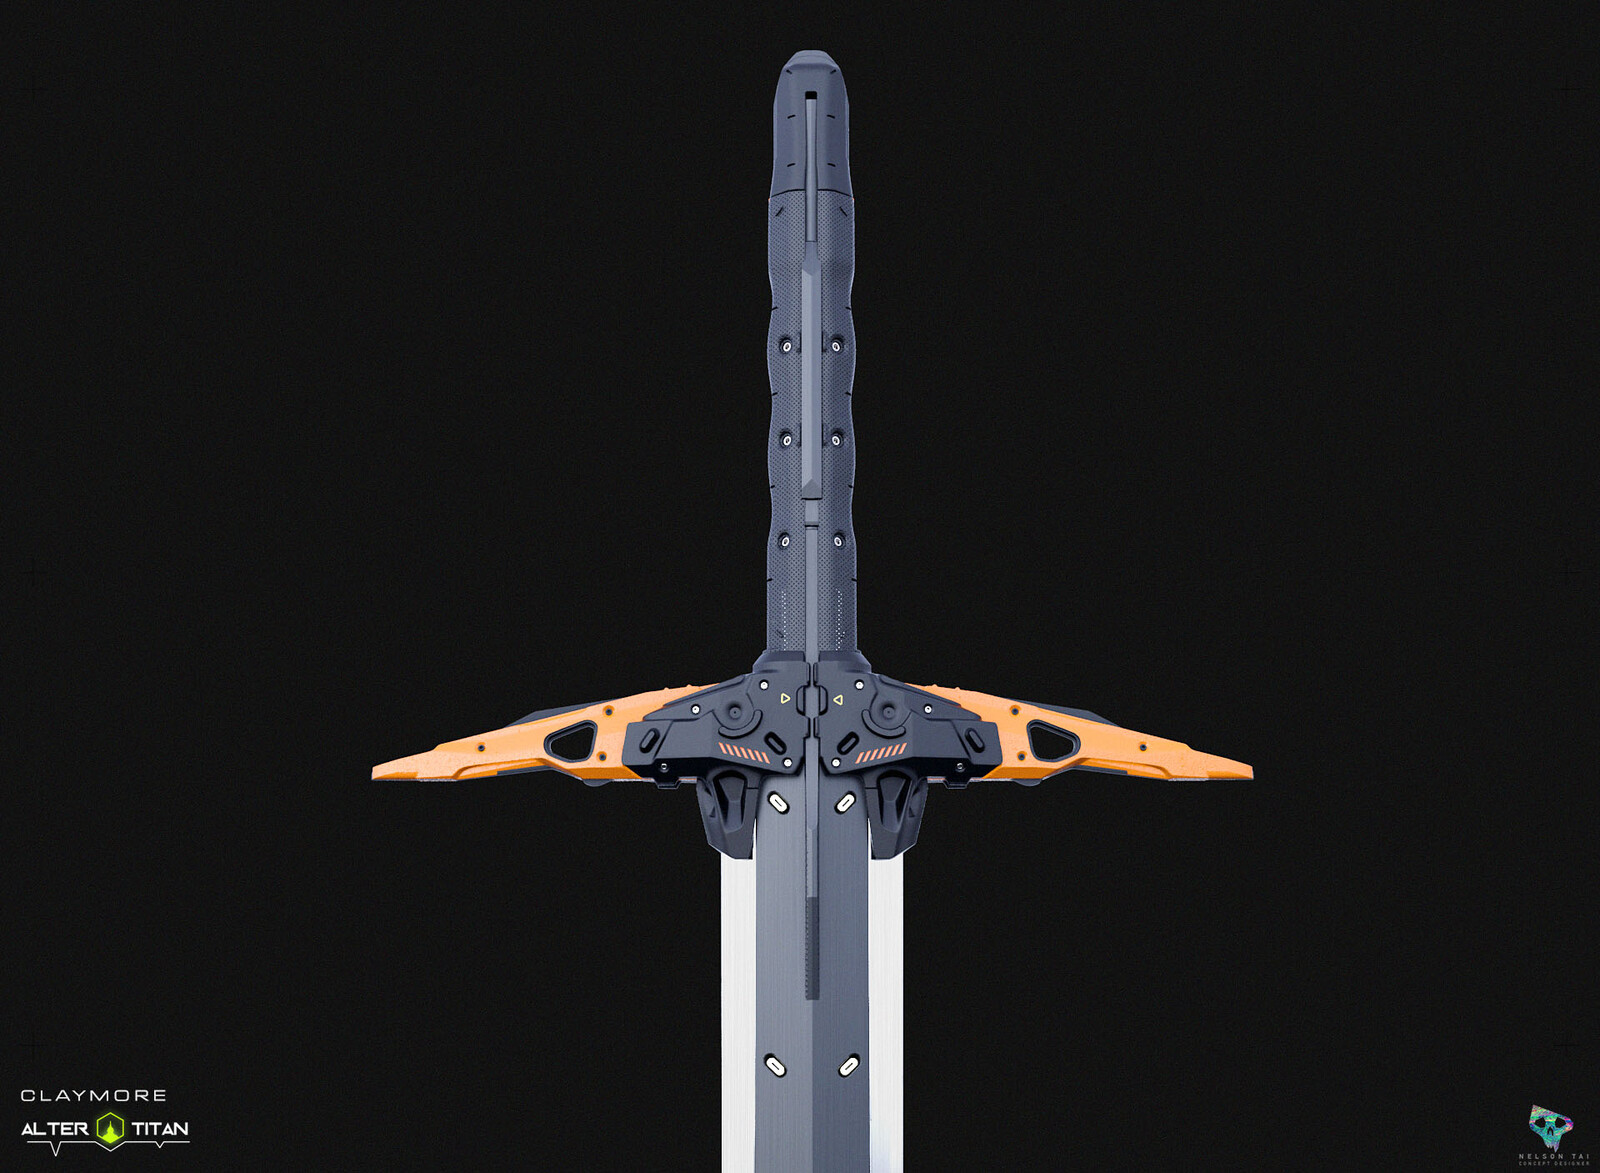 The legendary Claymore sword!